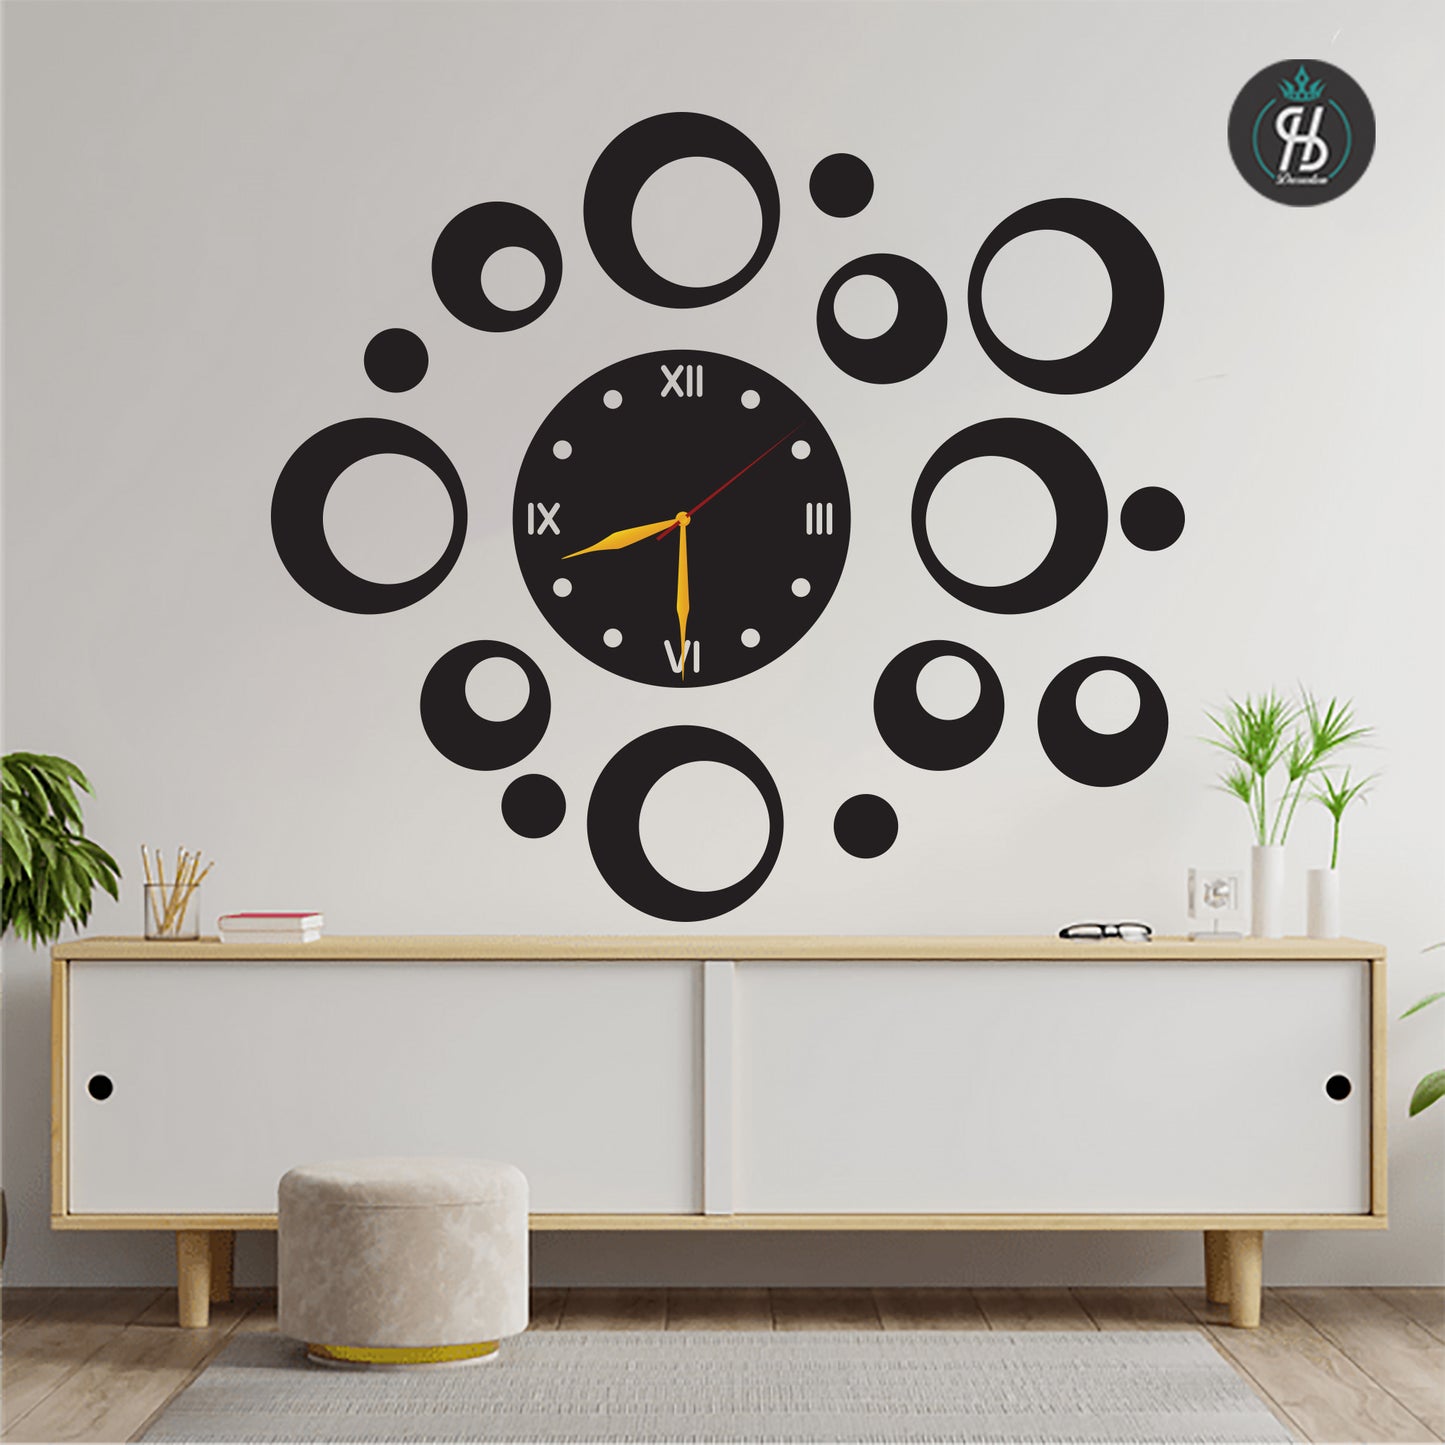 3D Circles Wall Clock